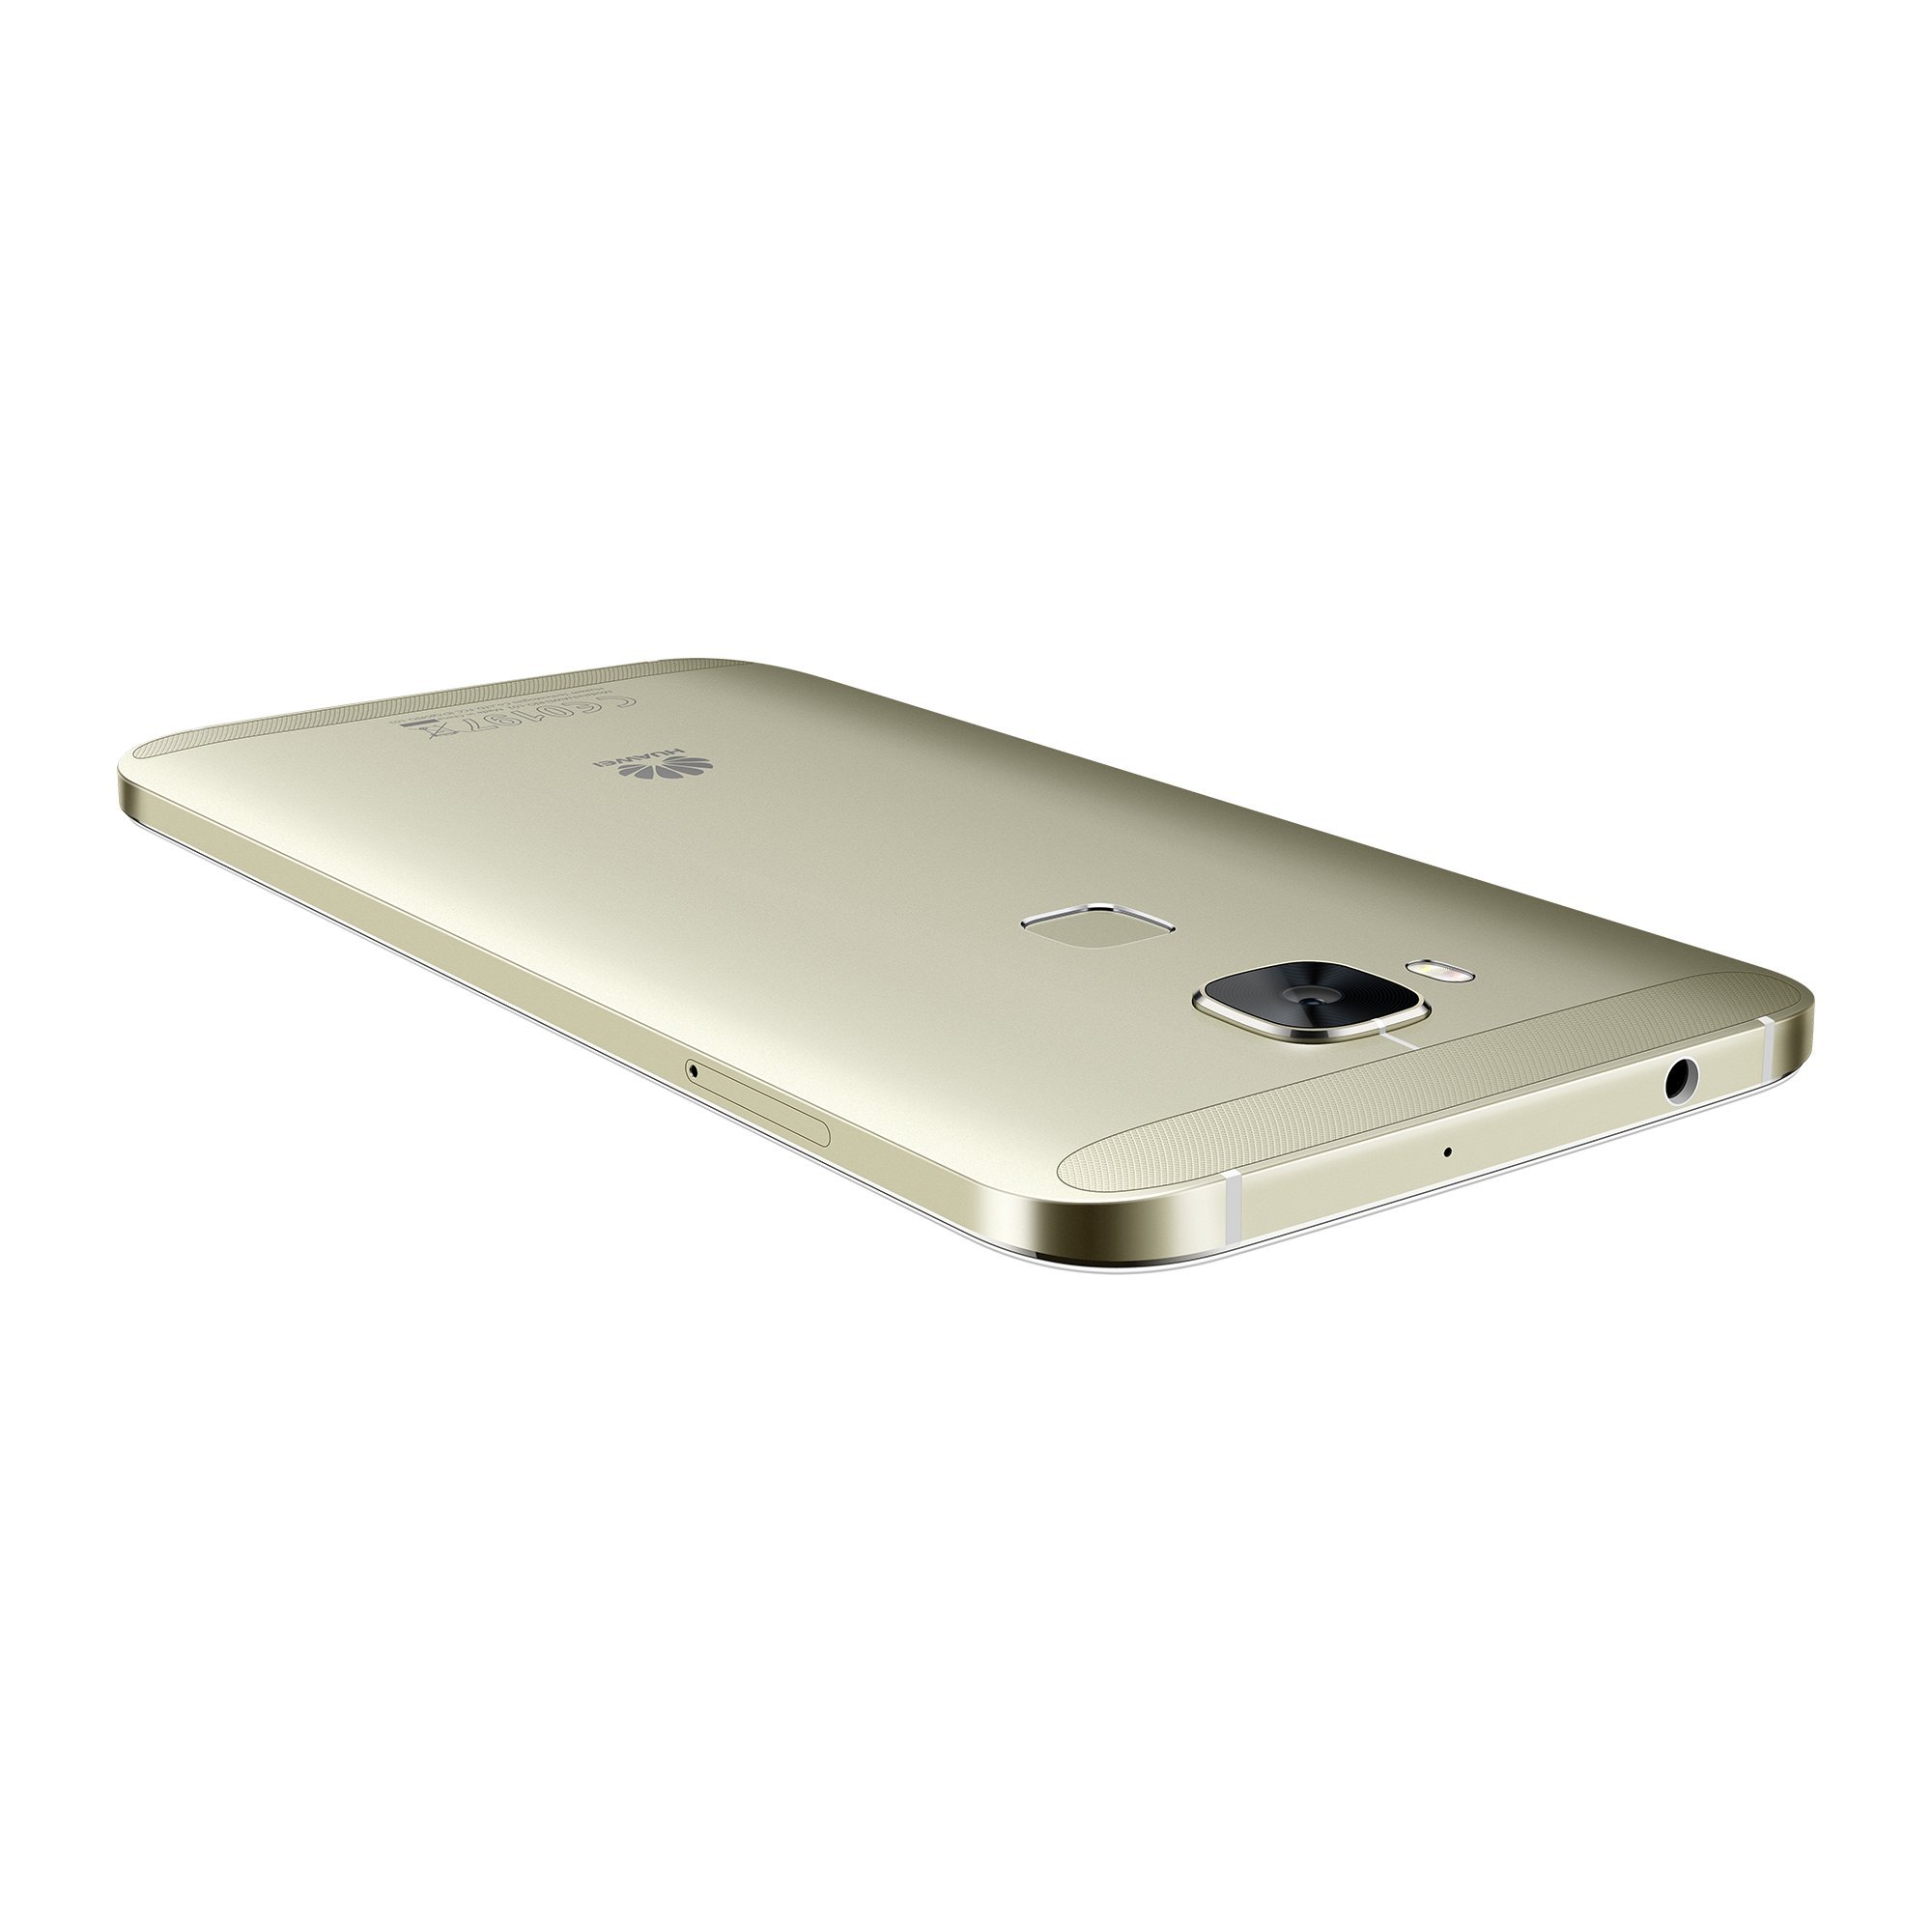 Huawei GX8 Unlocked Smartphone (US Version: RIO-L03) - Mystic Champagne (U.S. Warranty)